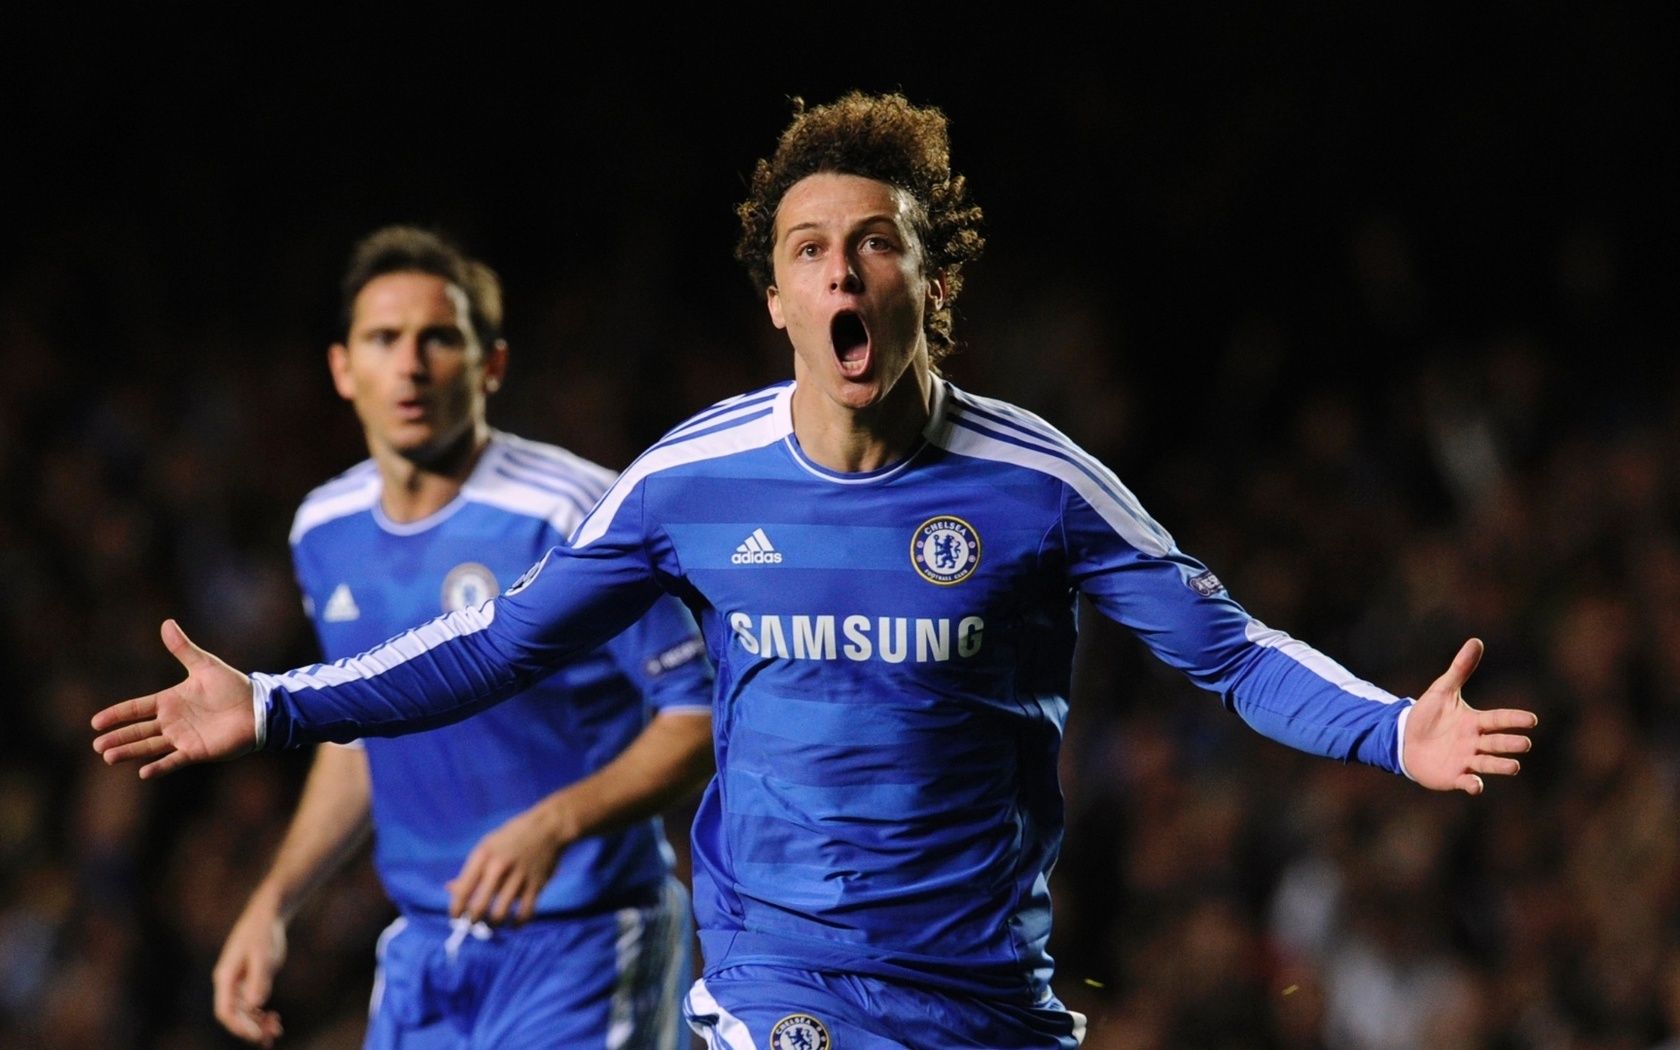 David Luiz, Stamford Bridge, Futbolsit, Football, Abramovich, - David Luiz Frank Lampard Chelsea - HD Wallpaper 